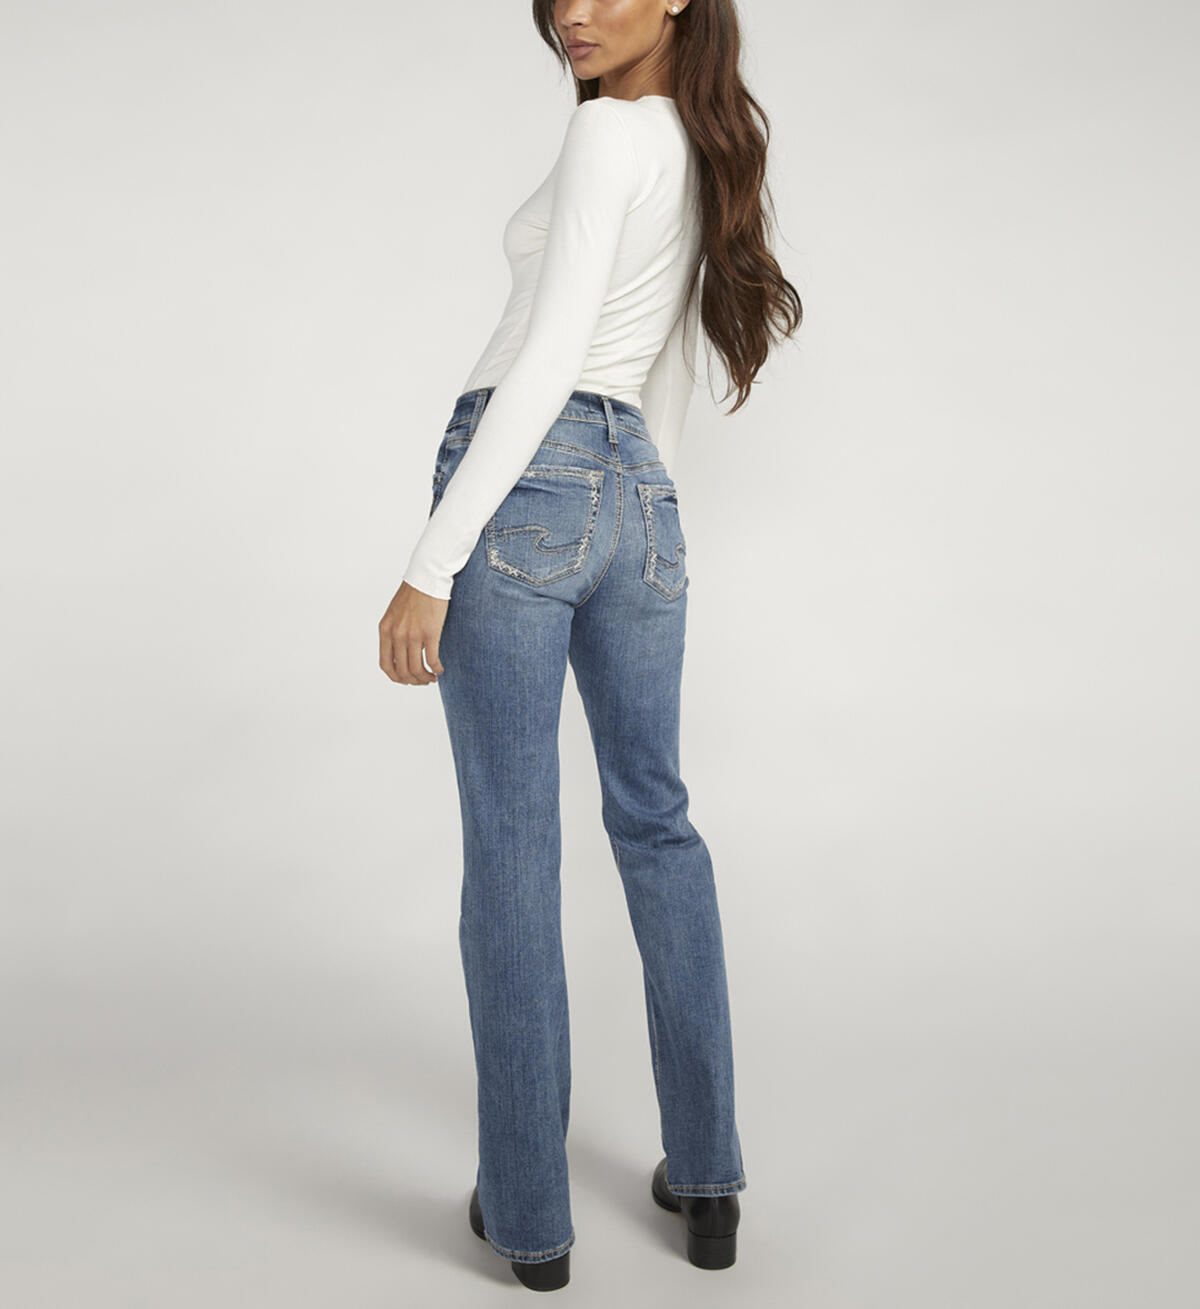 Suki Mid Rise Bootcut Jeans, Indigo, hi-res image number 1